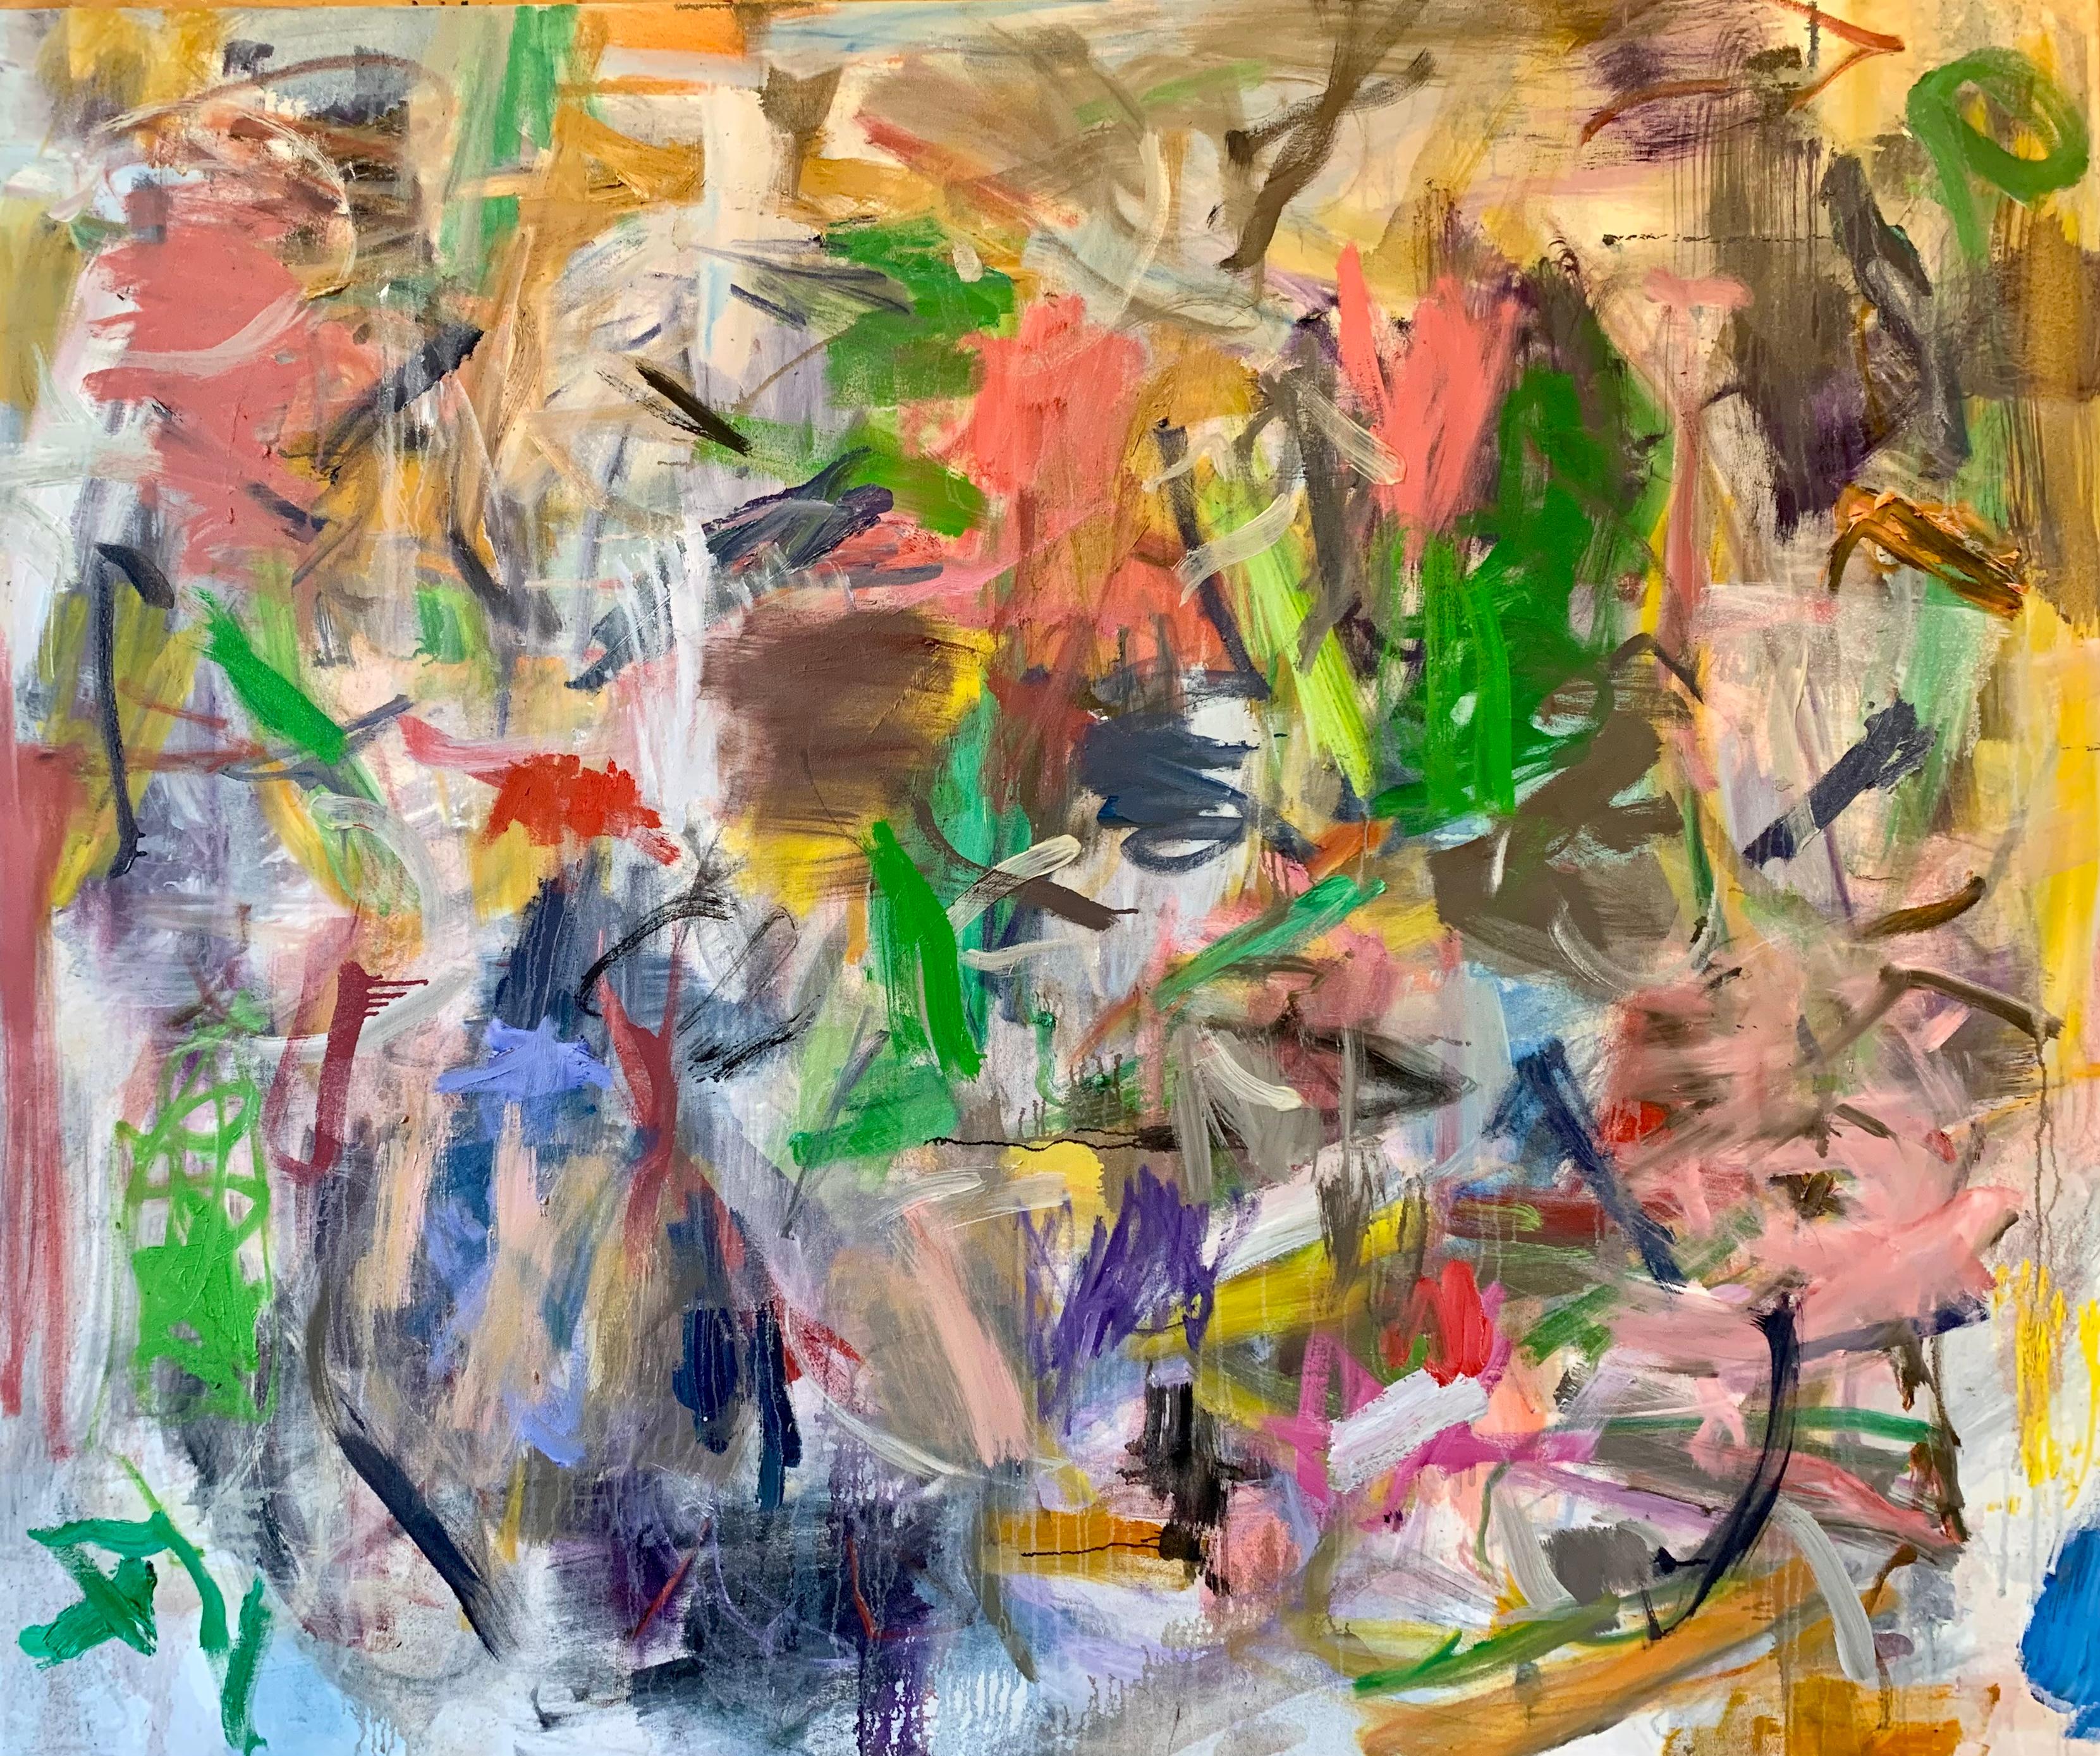 Scott Pattinson Abstract Painting – Was ist geworden